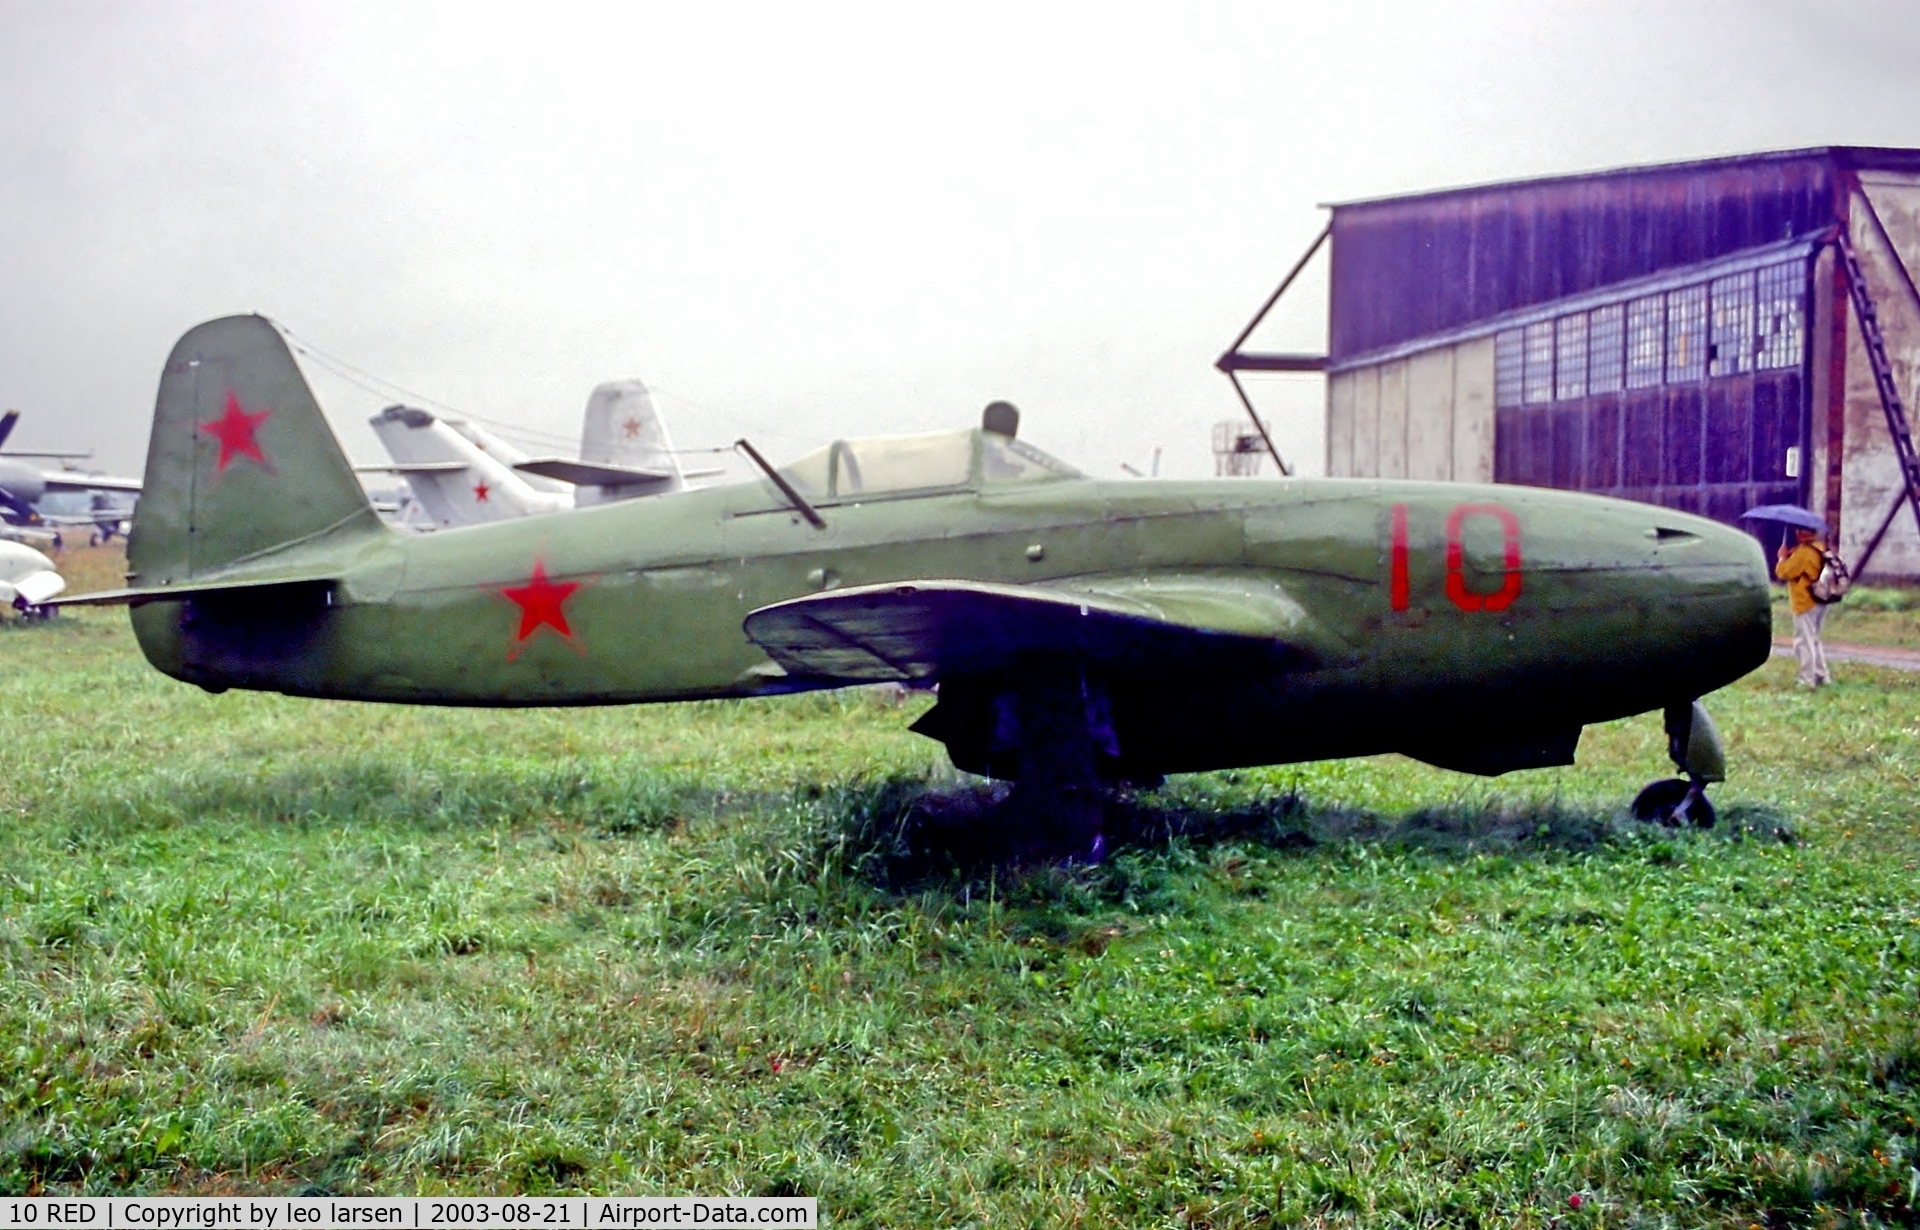 10 RED, 1948 Yakovlev YAK-17 C/N 10 RED Not found, Monino Museum Moscow 21.8.03.ex 02